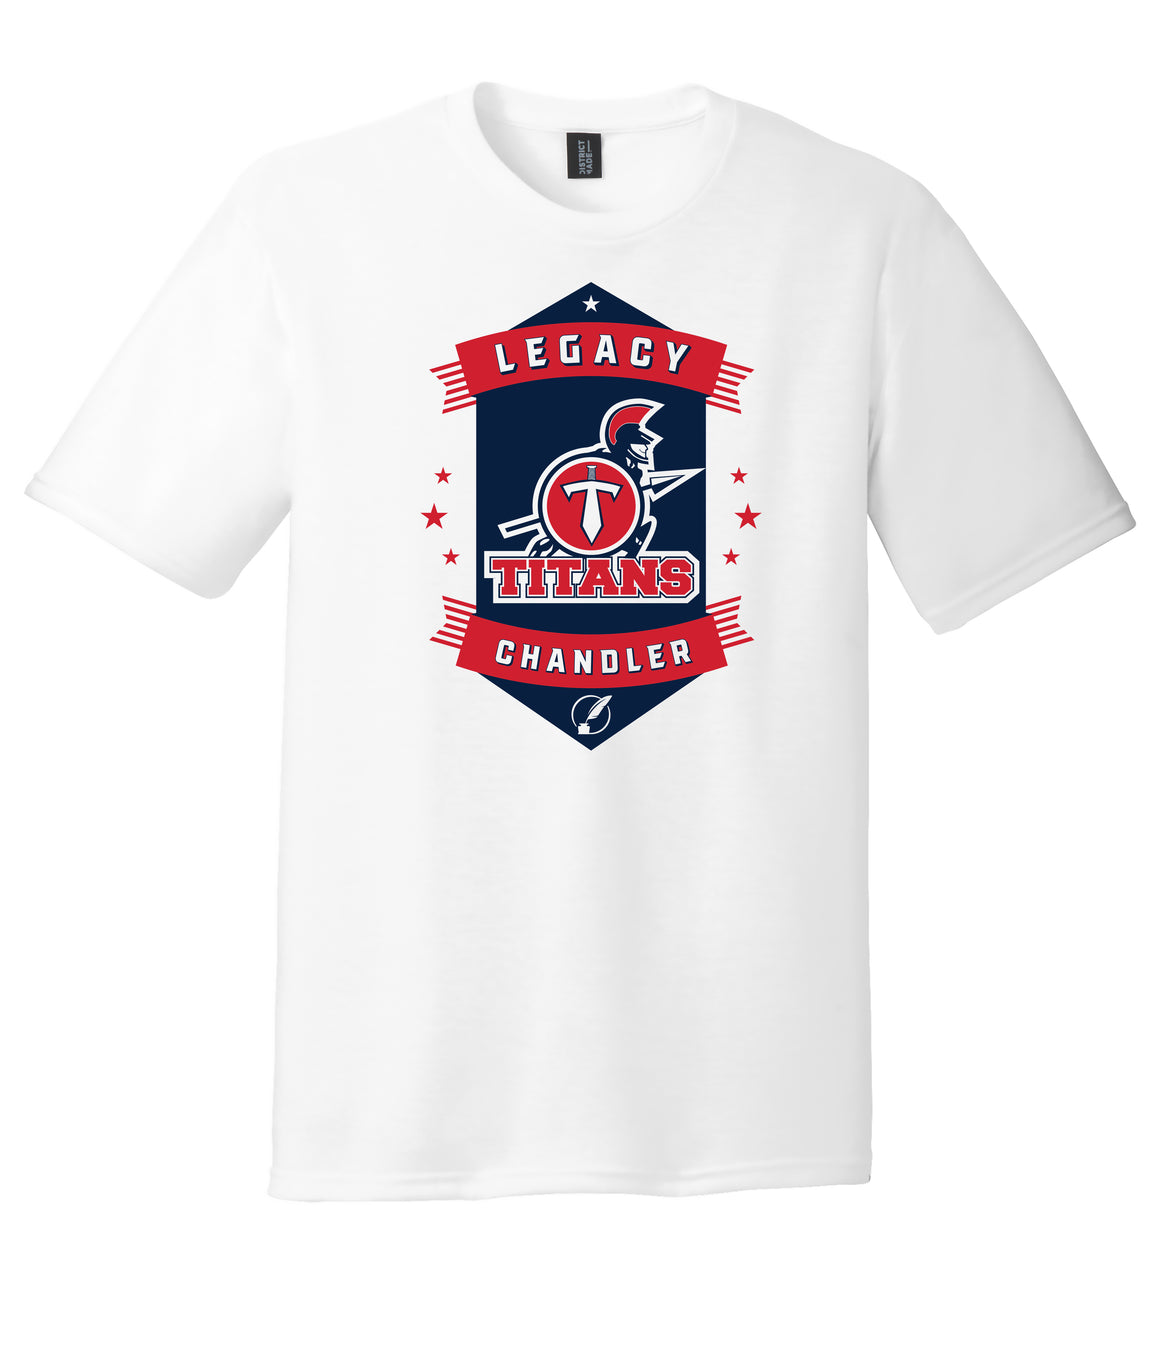 Legacy Traditional School Chandler - White Spirit Day Shirt w/Mascot